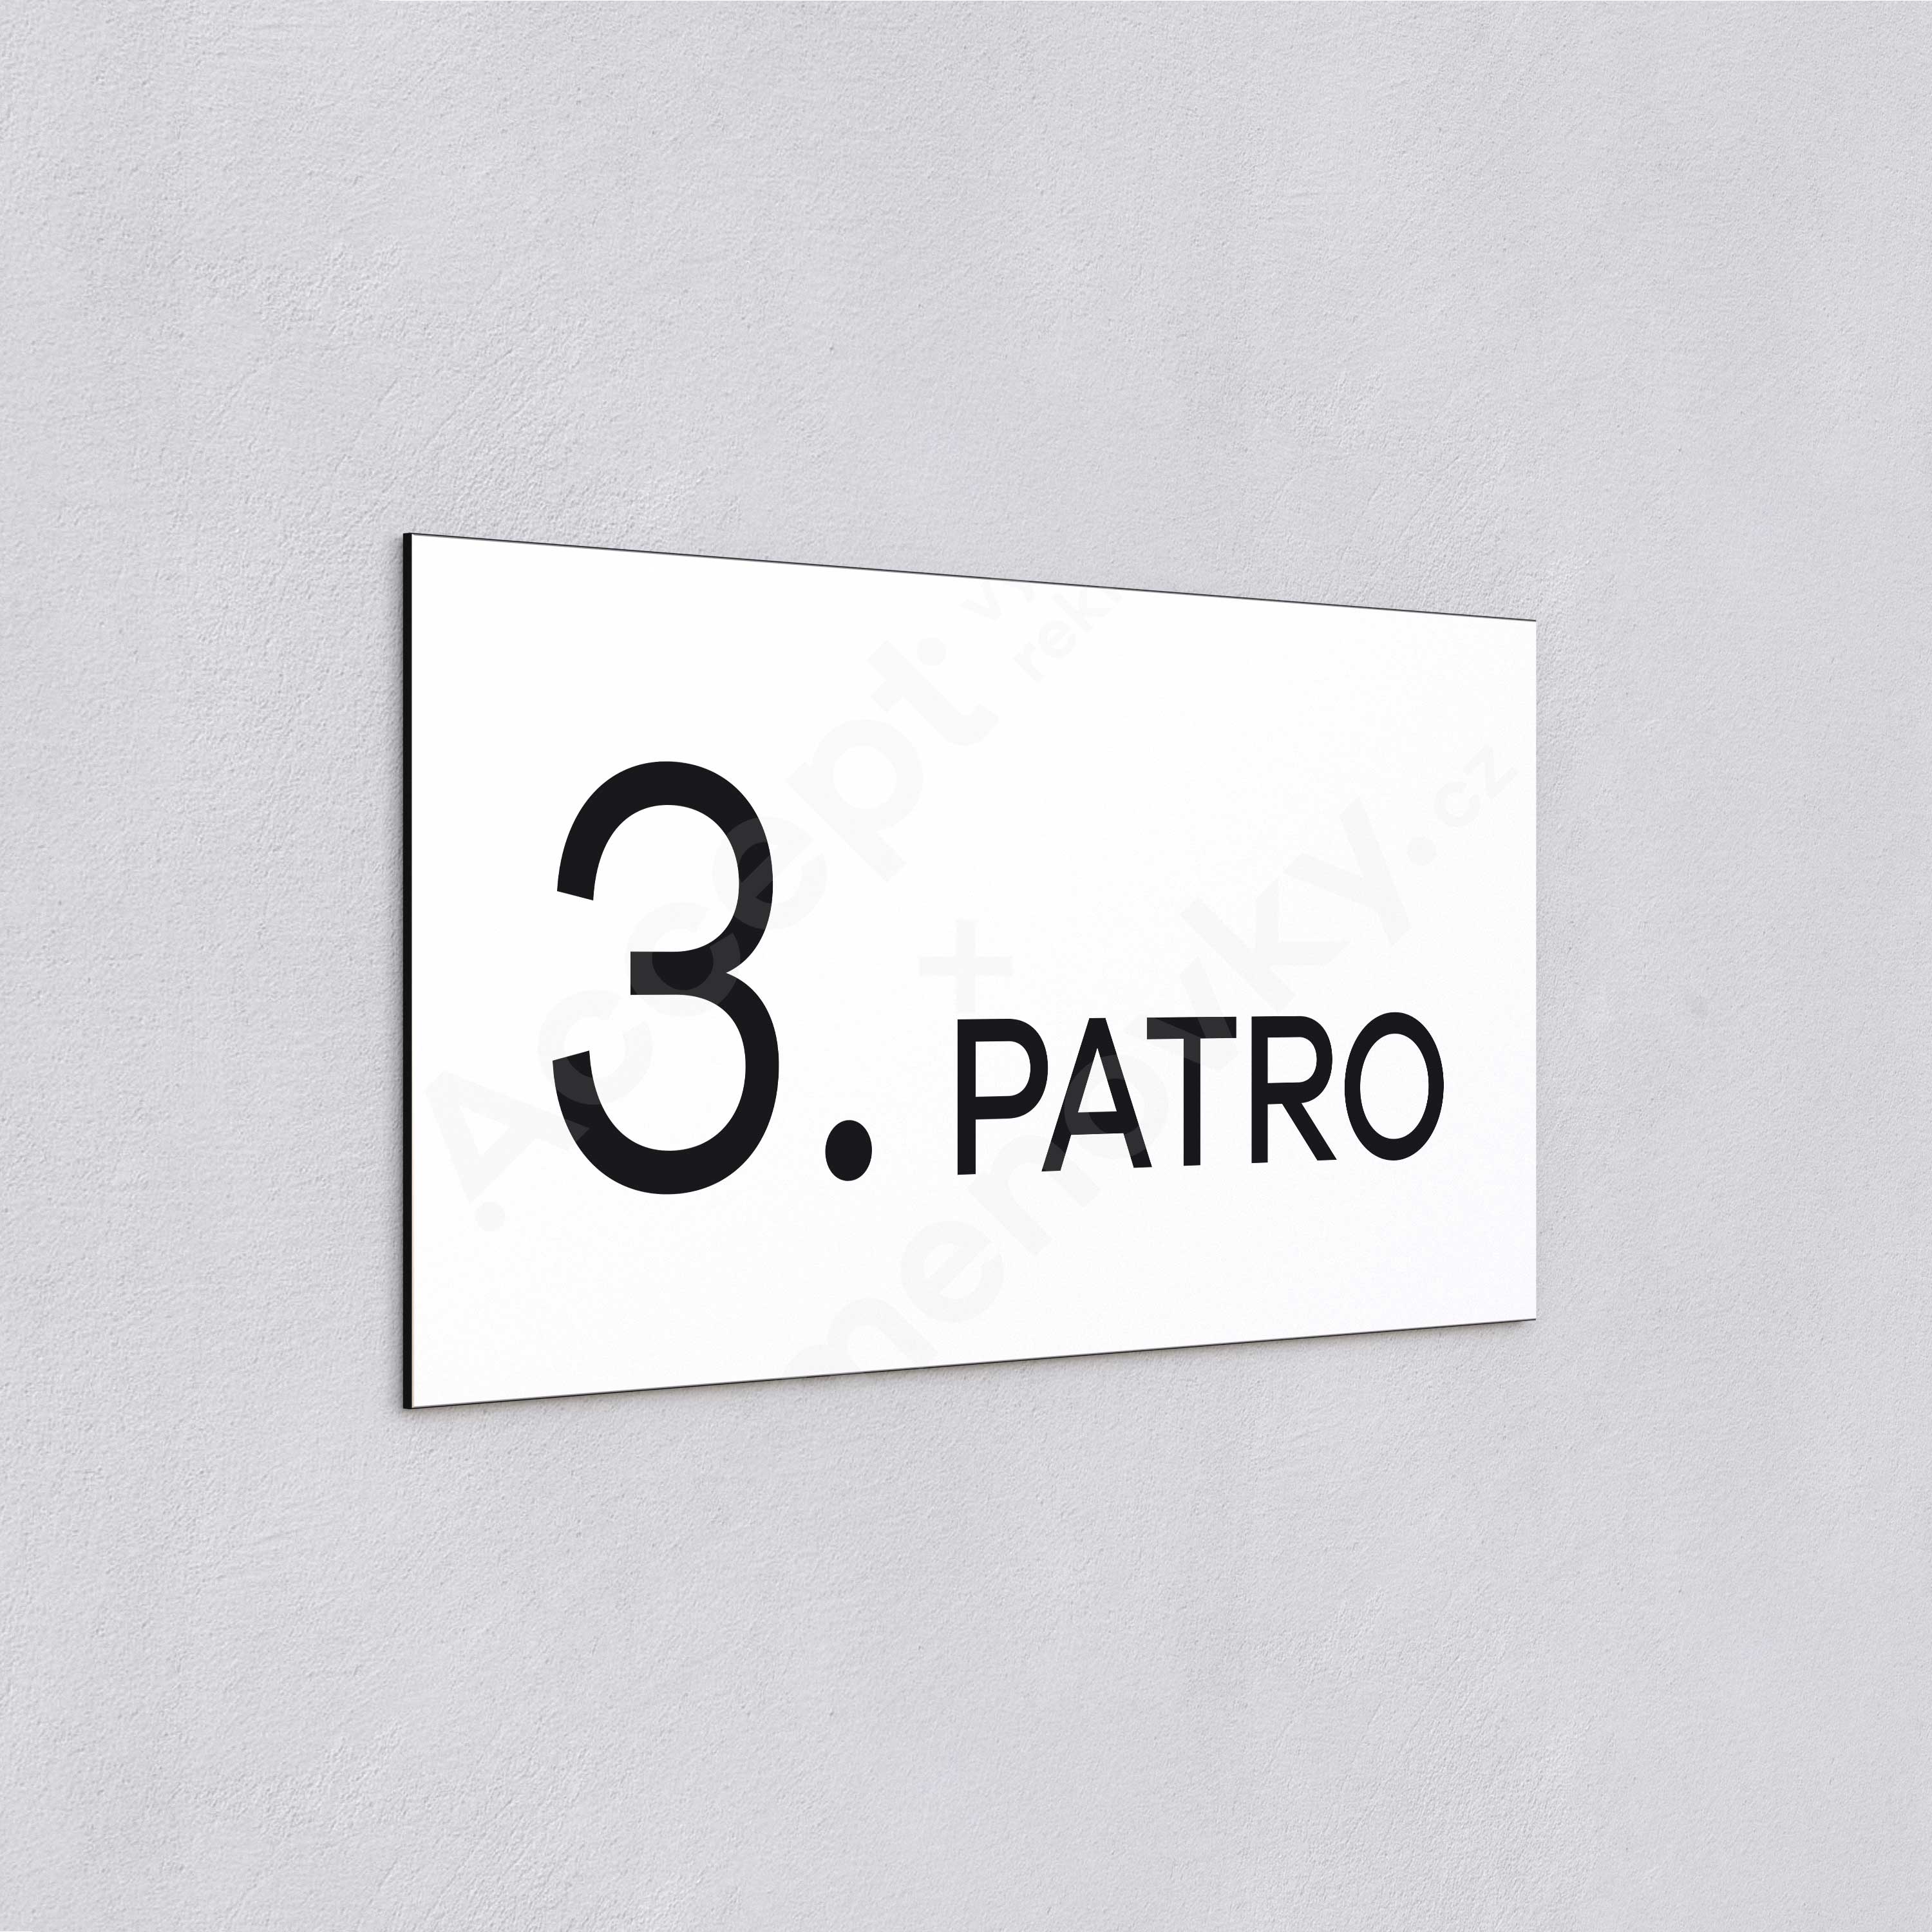 ACCEPT Označení podlaží "3. PATRO" (300 x 150 mm) - bílá tabulka - černý popis